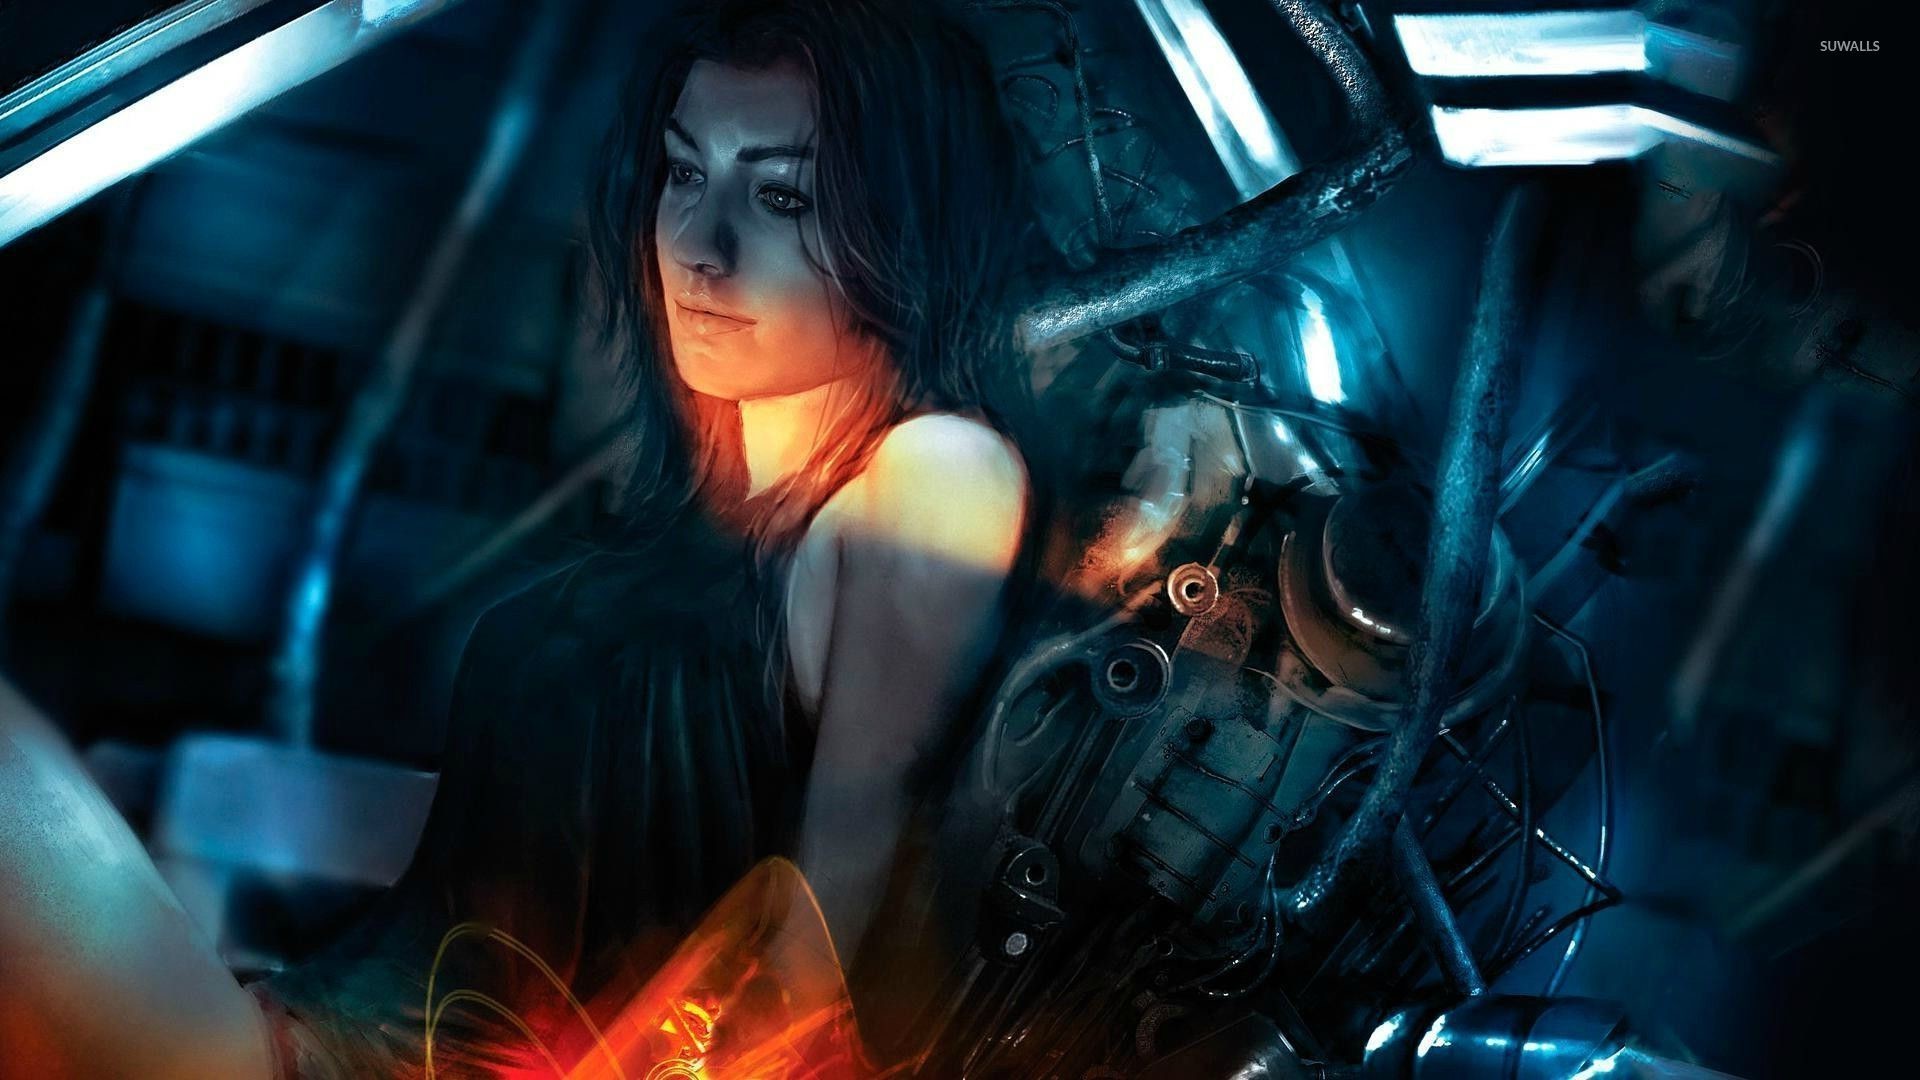 1920x1080 2560x1600 Dr Liara T'Soni - Mass Effect Rp Wallpaper (33419316) - Fanpop